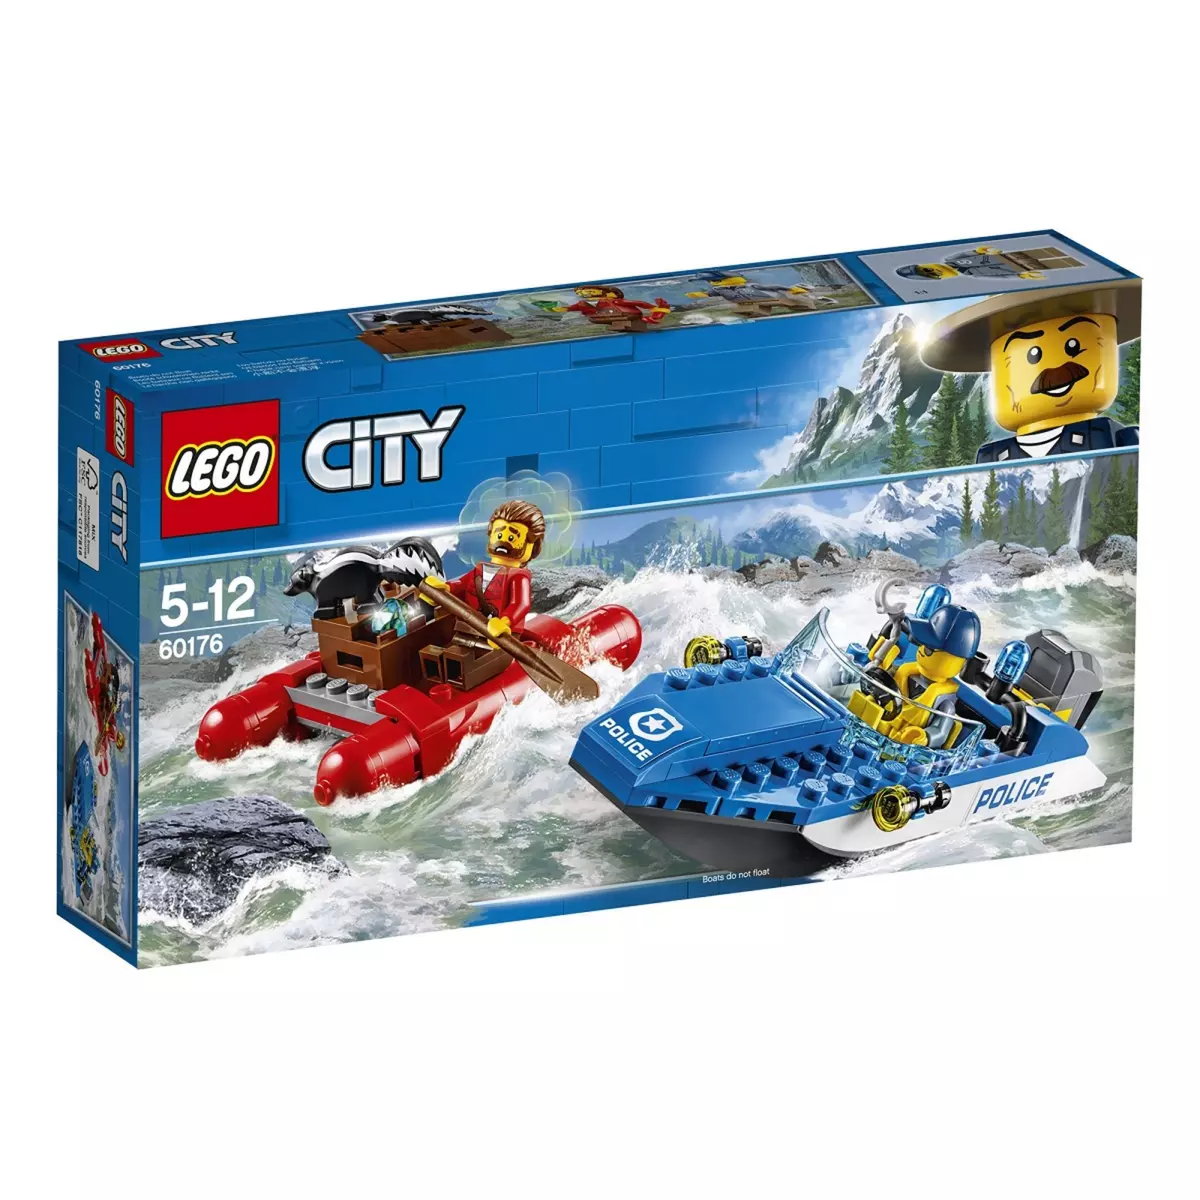 LEGO City 60176 - L'arrestation en hors-bord